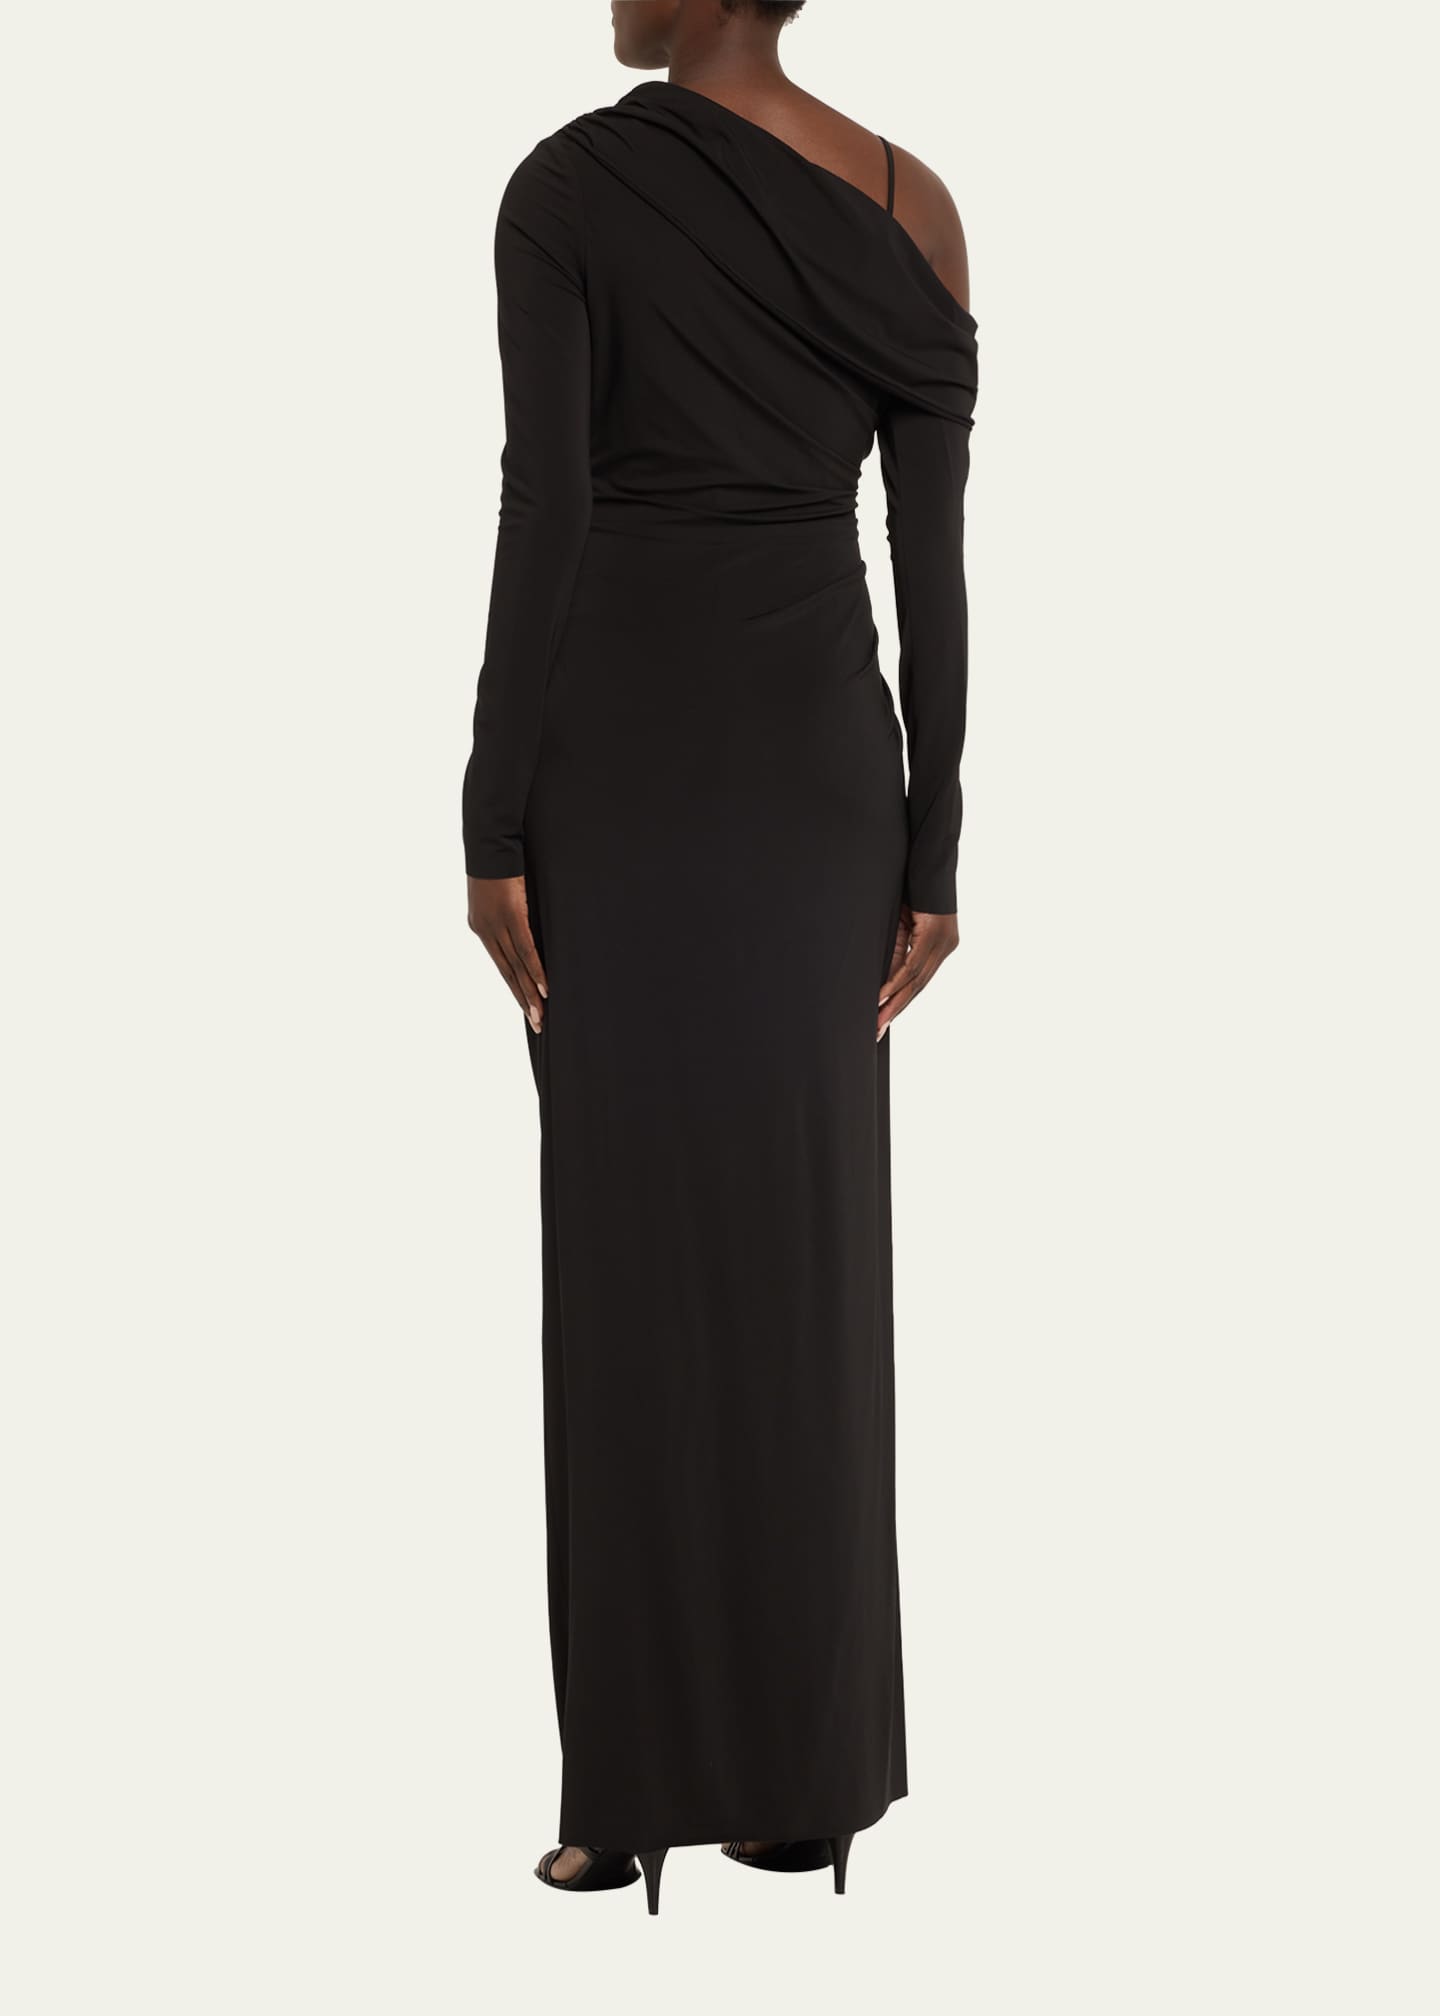 Jason Wu Collection Cold-Shoulder Ruched Jersey Dress - Bergdorf Goodman